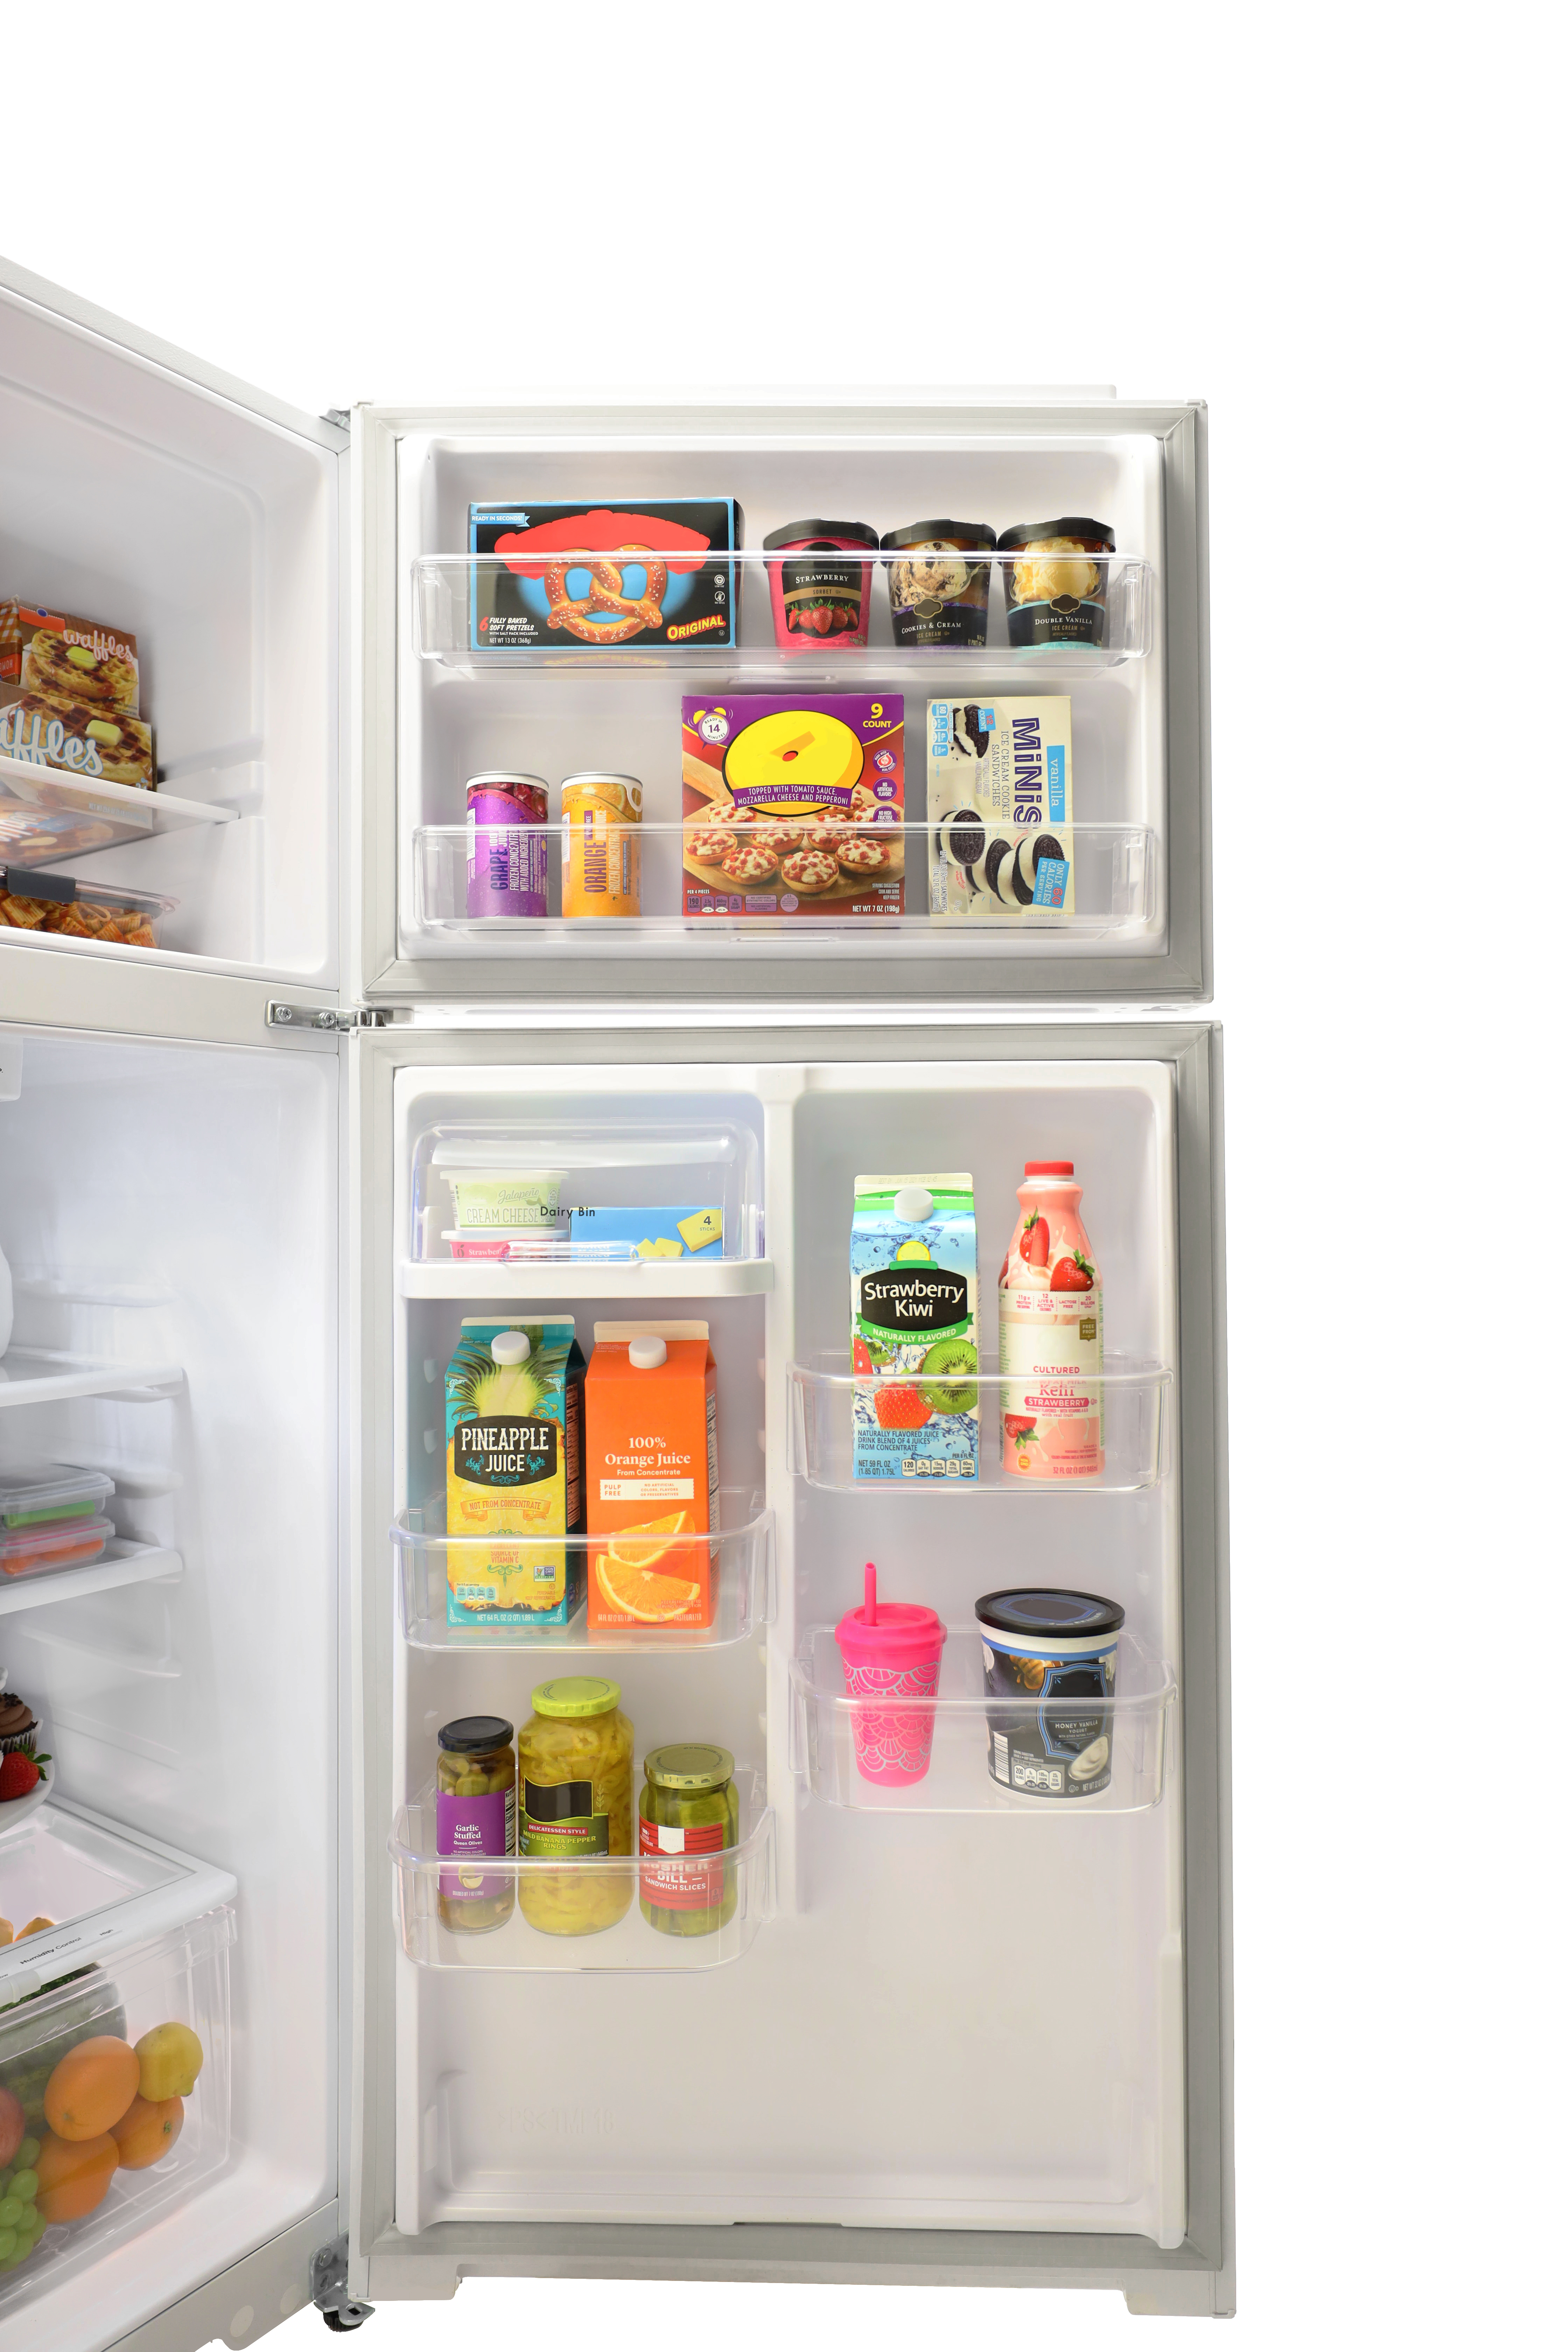 Refrigerators: Buy Refrigerators in Appliances at Sears